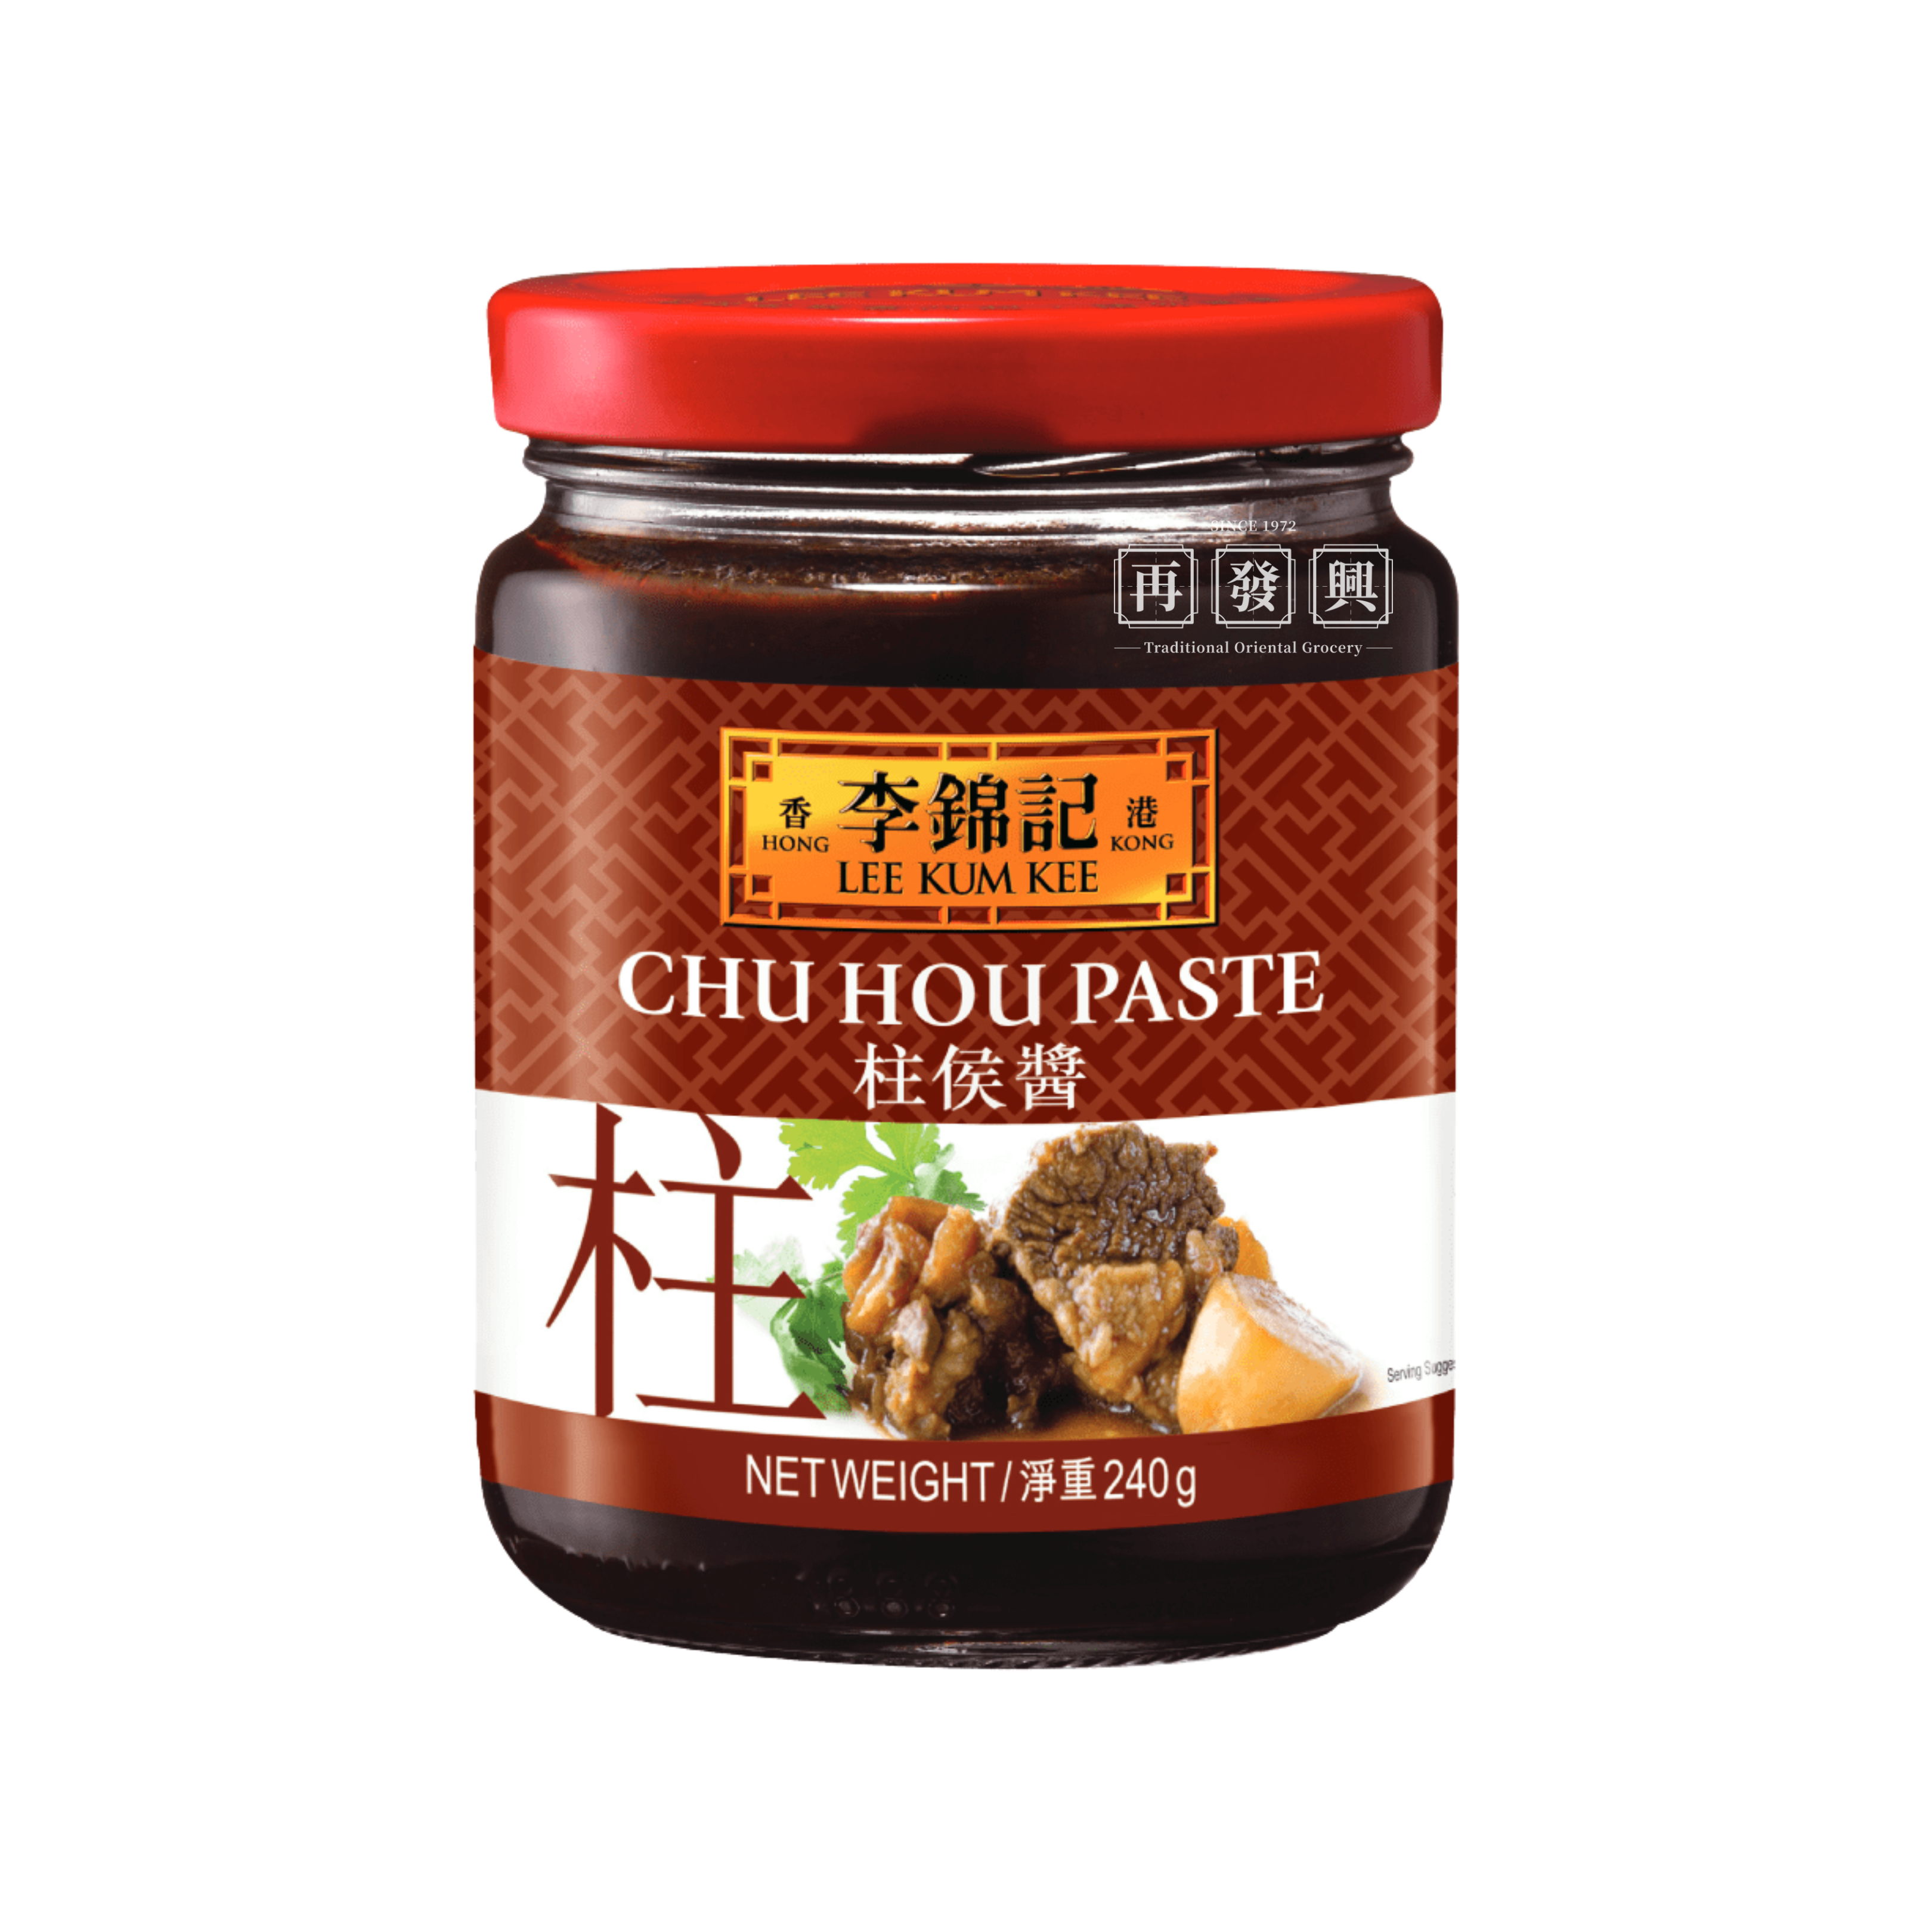 LKK HK Imported Chu Hou Paste 240g